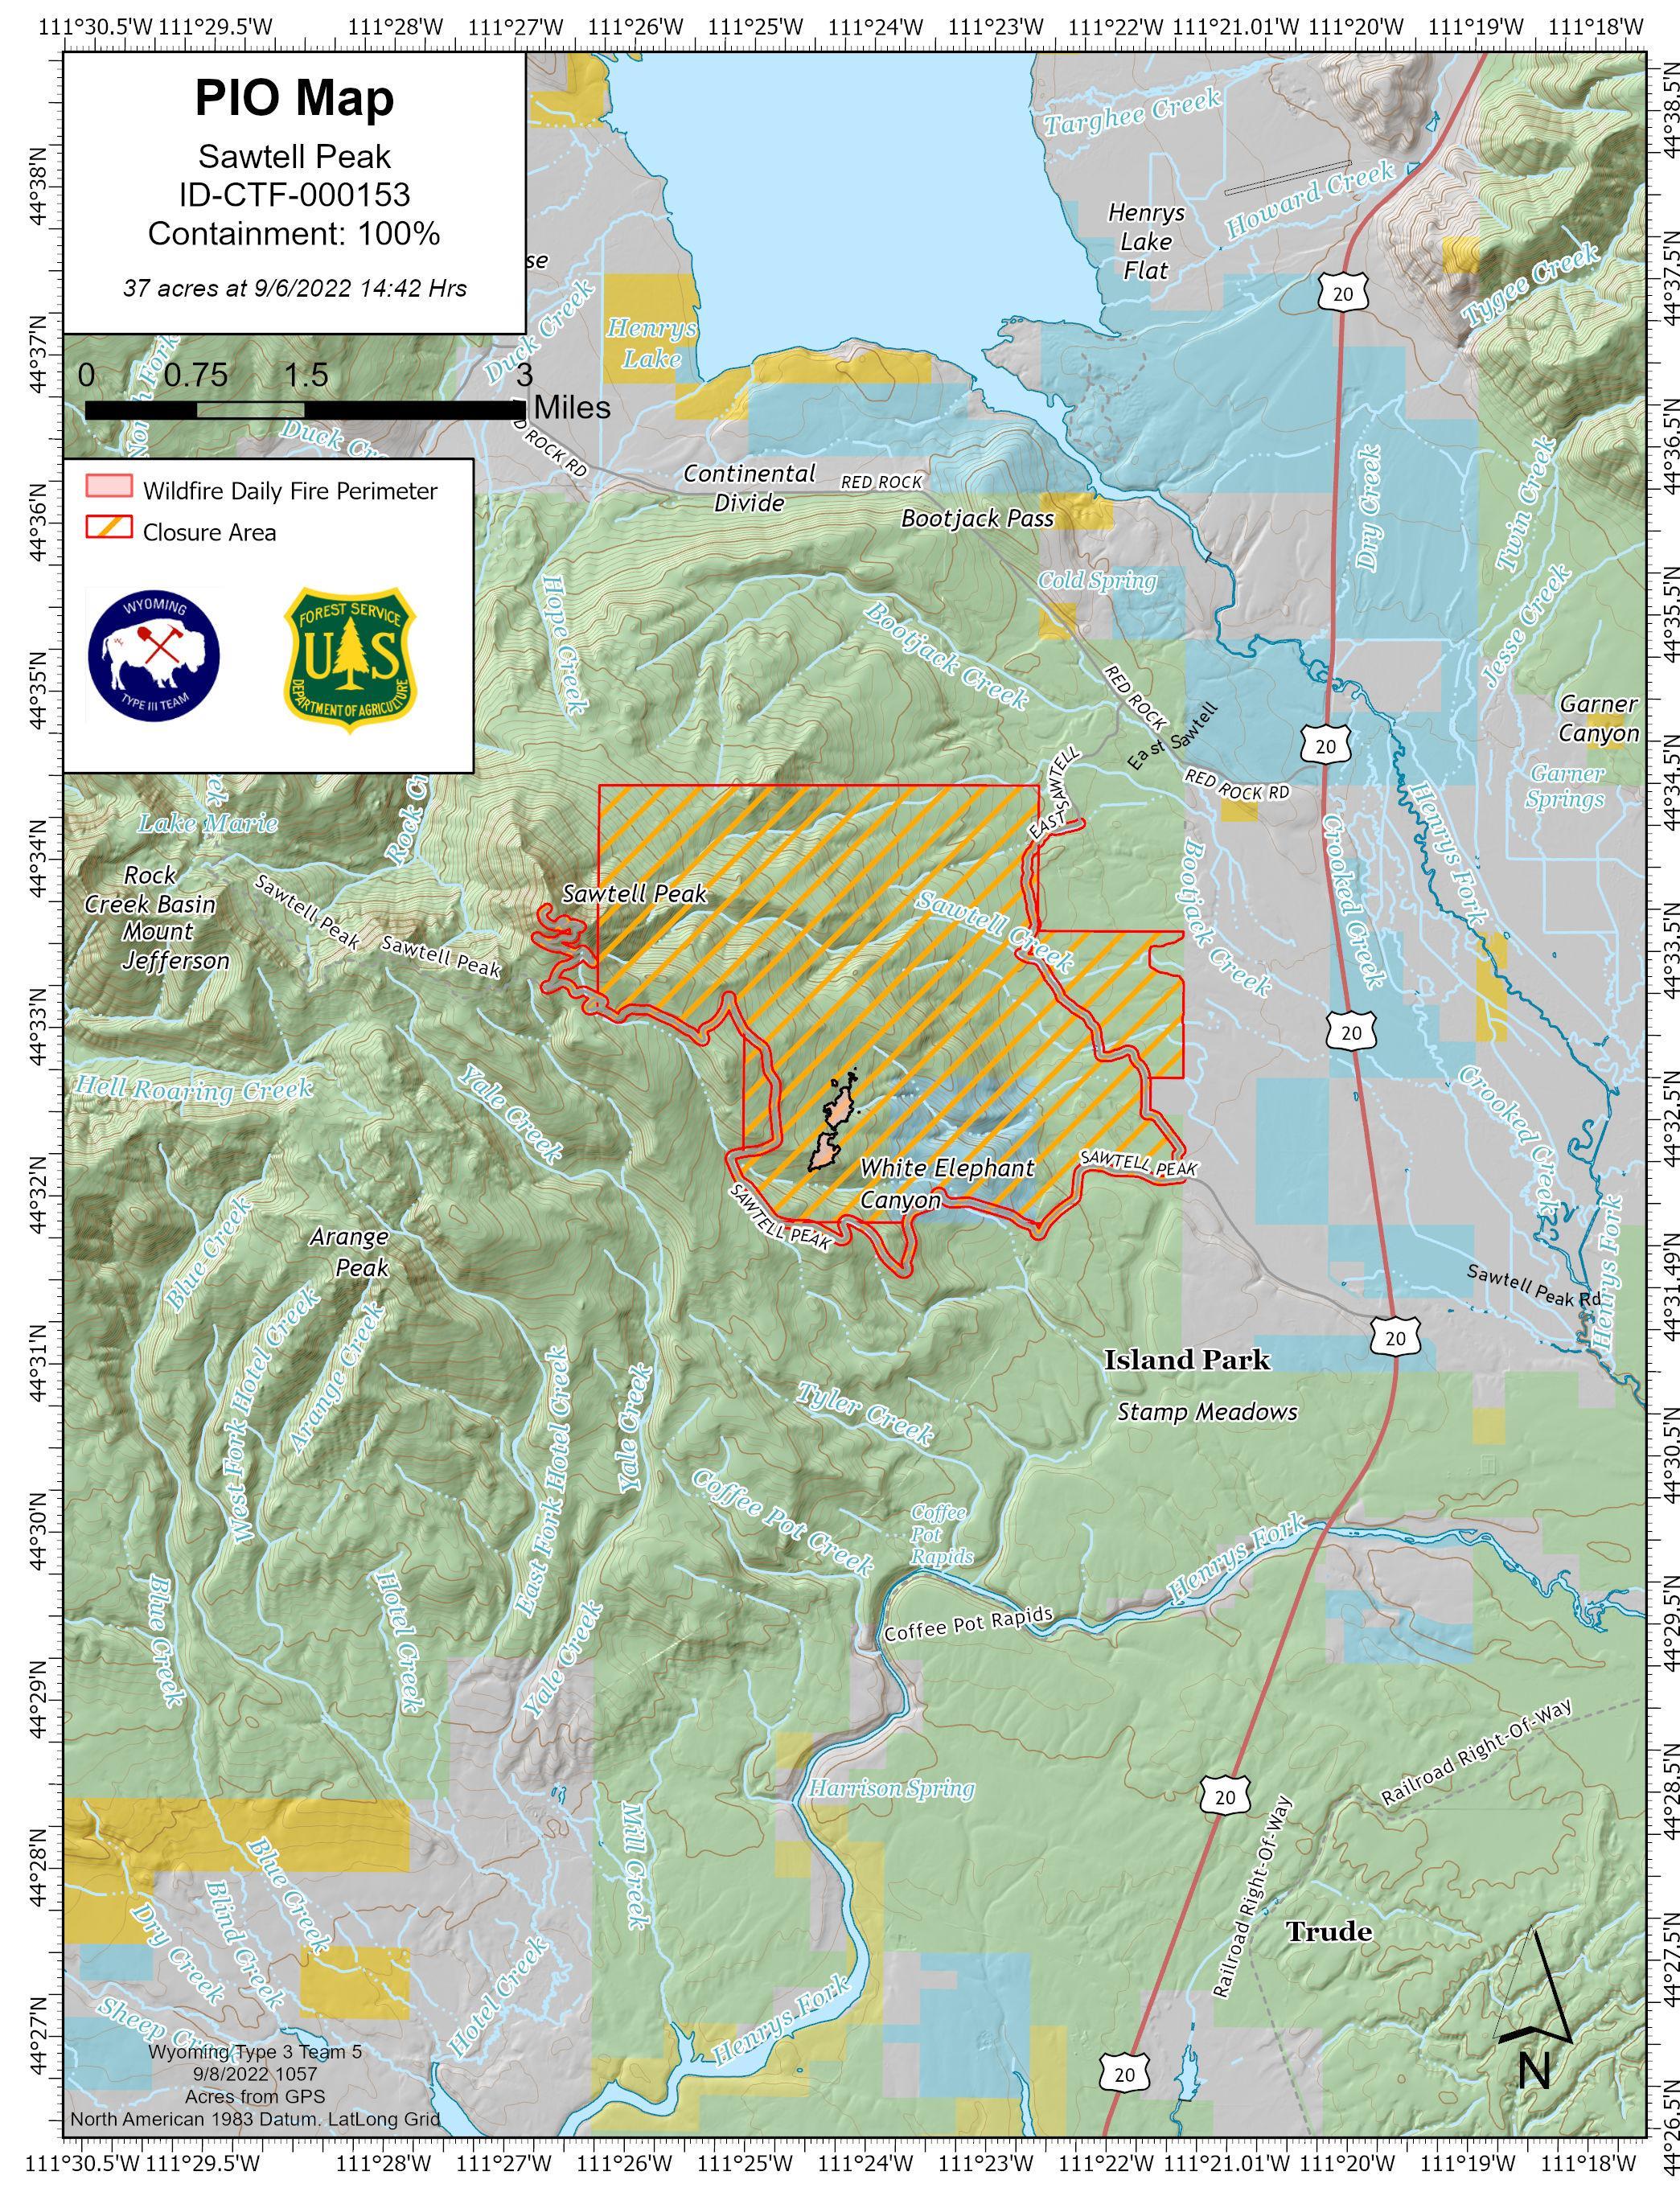 Sawtell Peak Public Information Map 9.9.2022